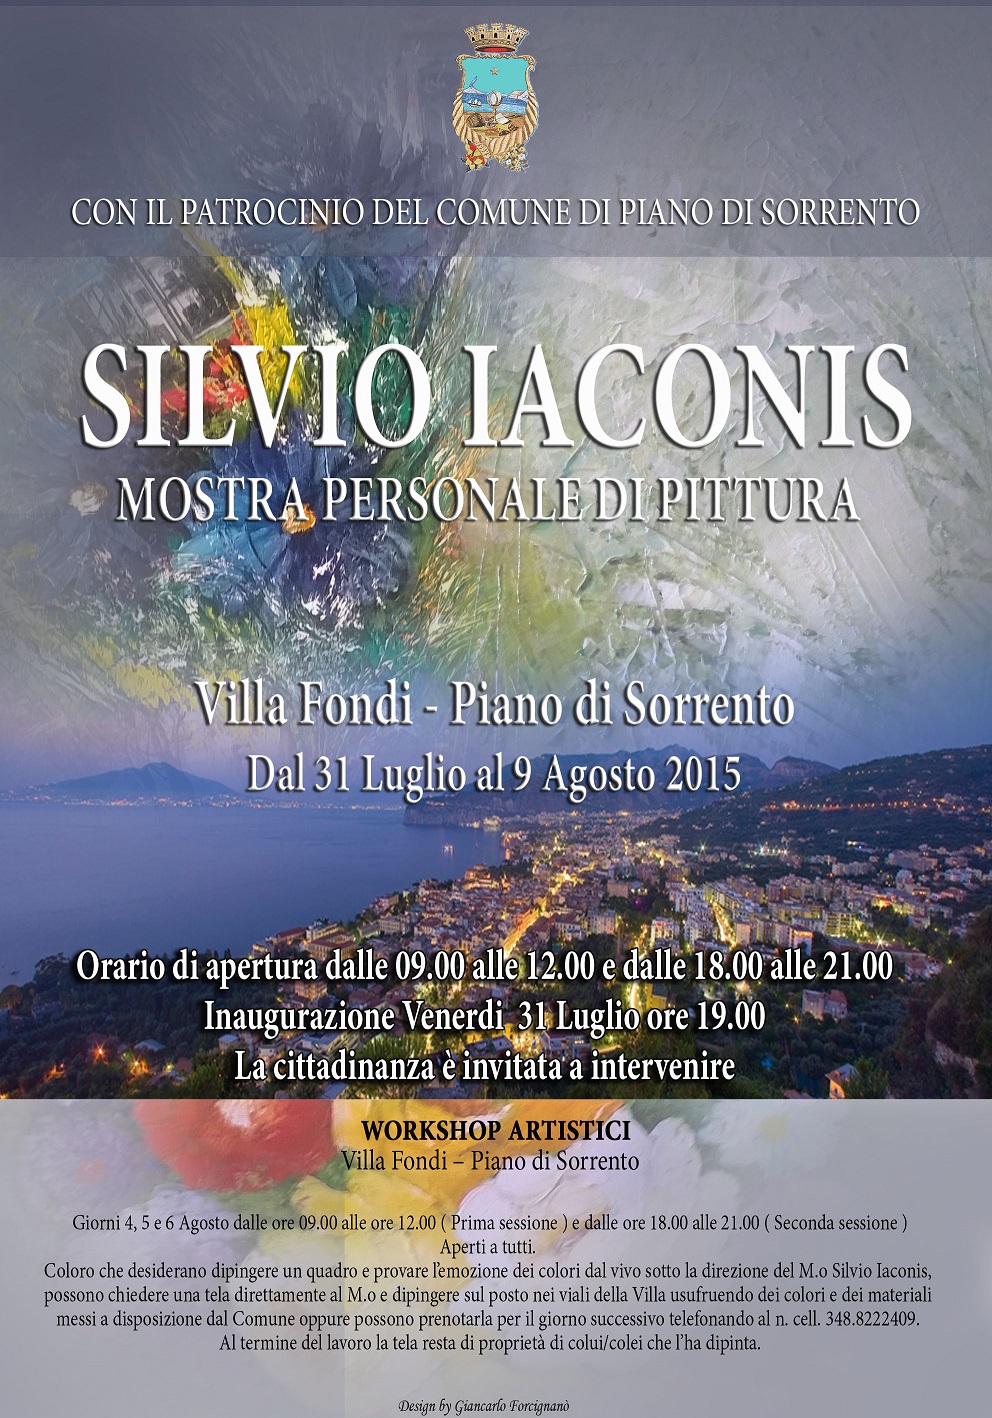  Silvio Iaconis: mostra di pittura e workshop artistici a Villa Fondi